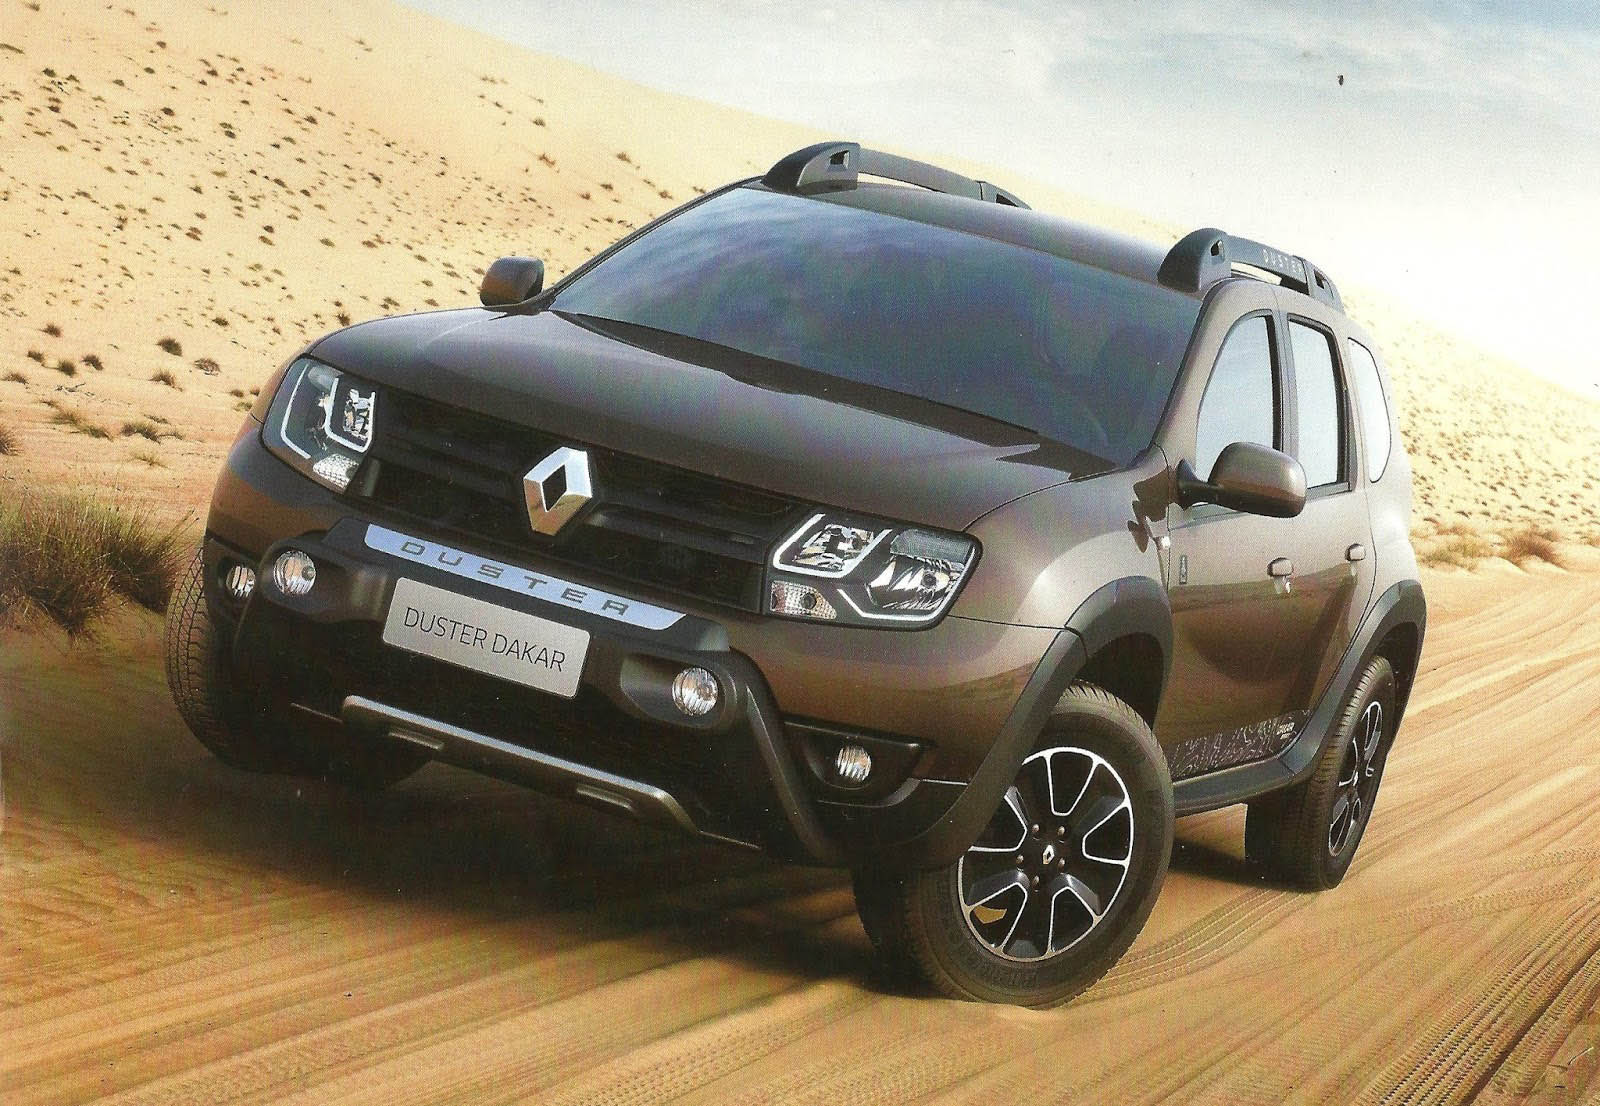 Renault duster dakar отзывы владельцев: минусы и плюсы